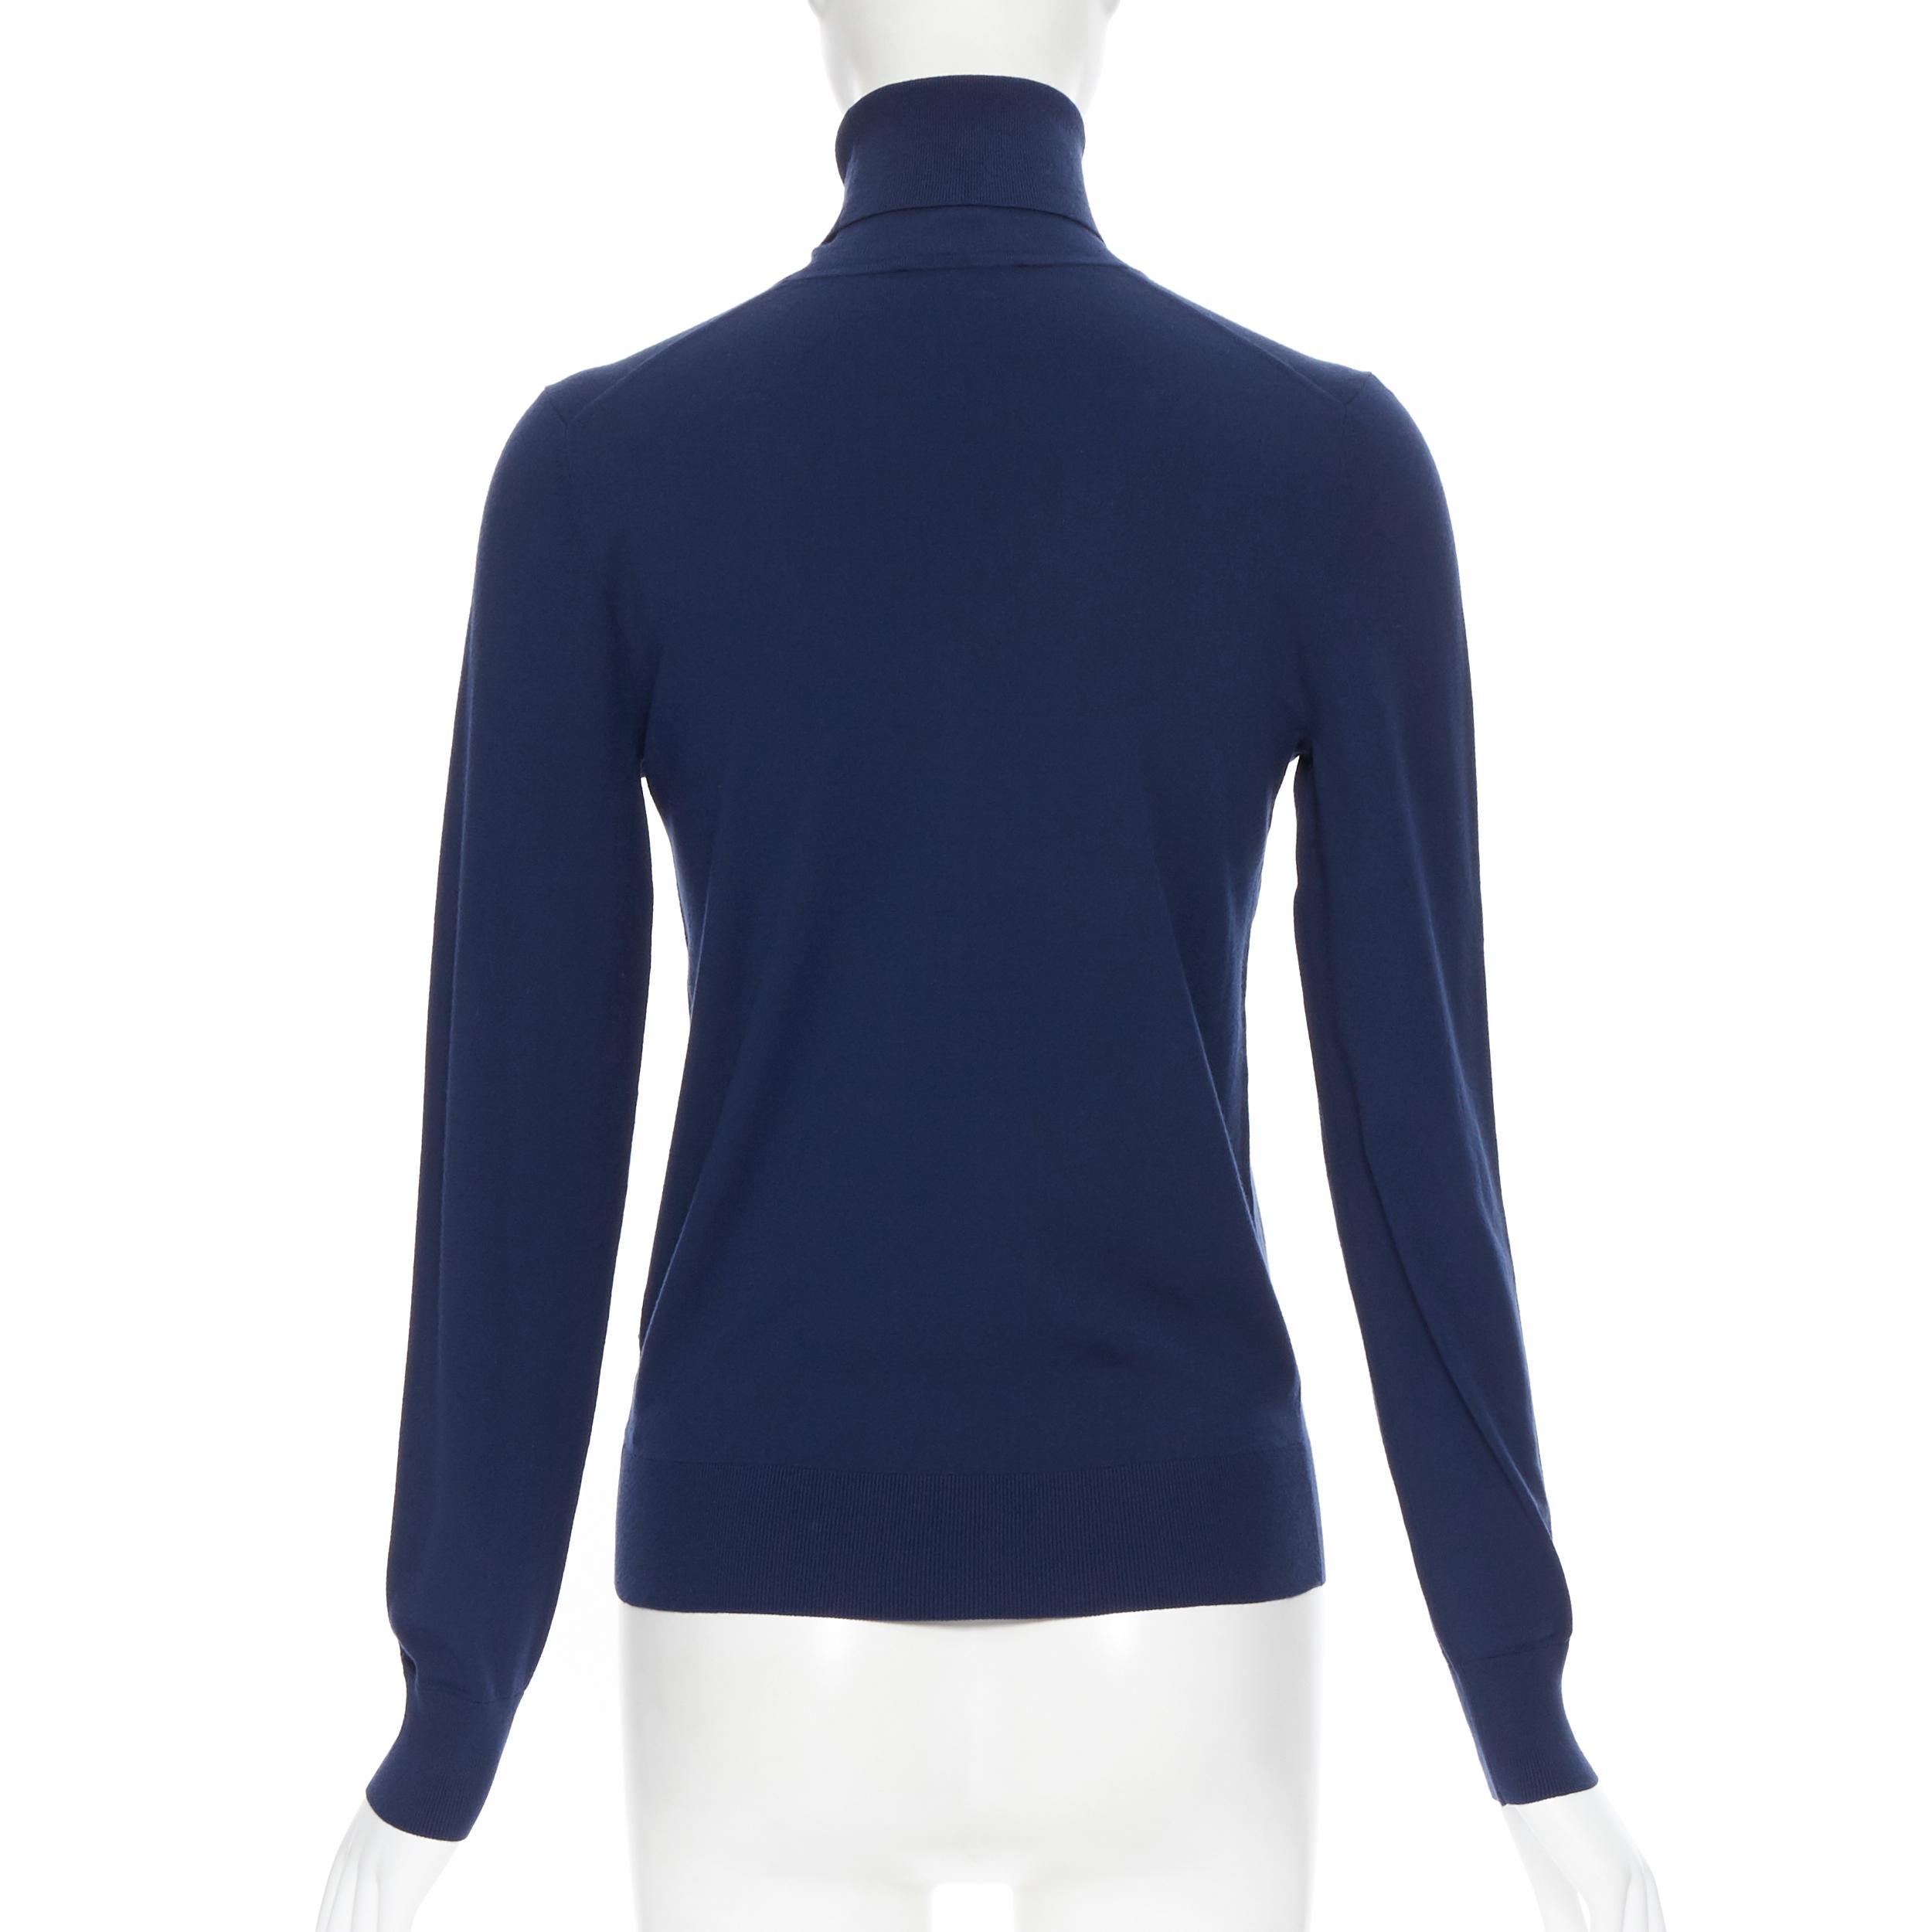 Blue MICHAEL KORS COLLECTION navy blue minimalist short fit turtleneck sweater top XS